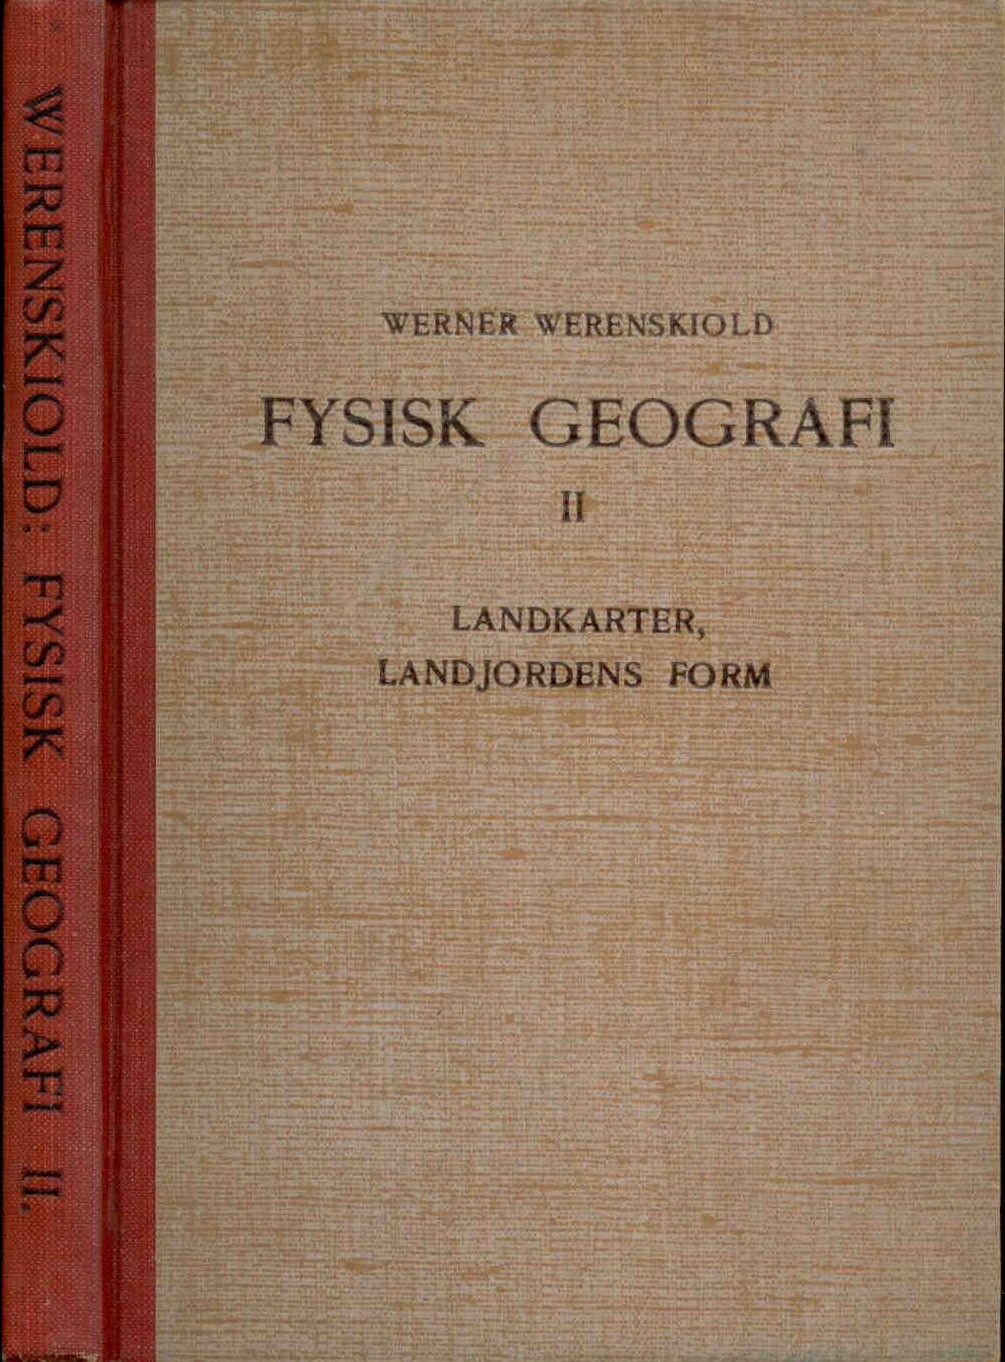 Werenskiold W.: Fysisk geografi. II. Landkarter, landjordens form.